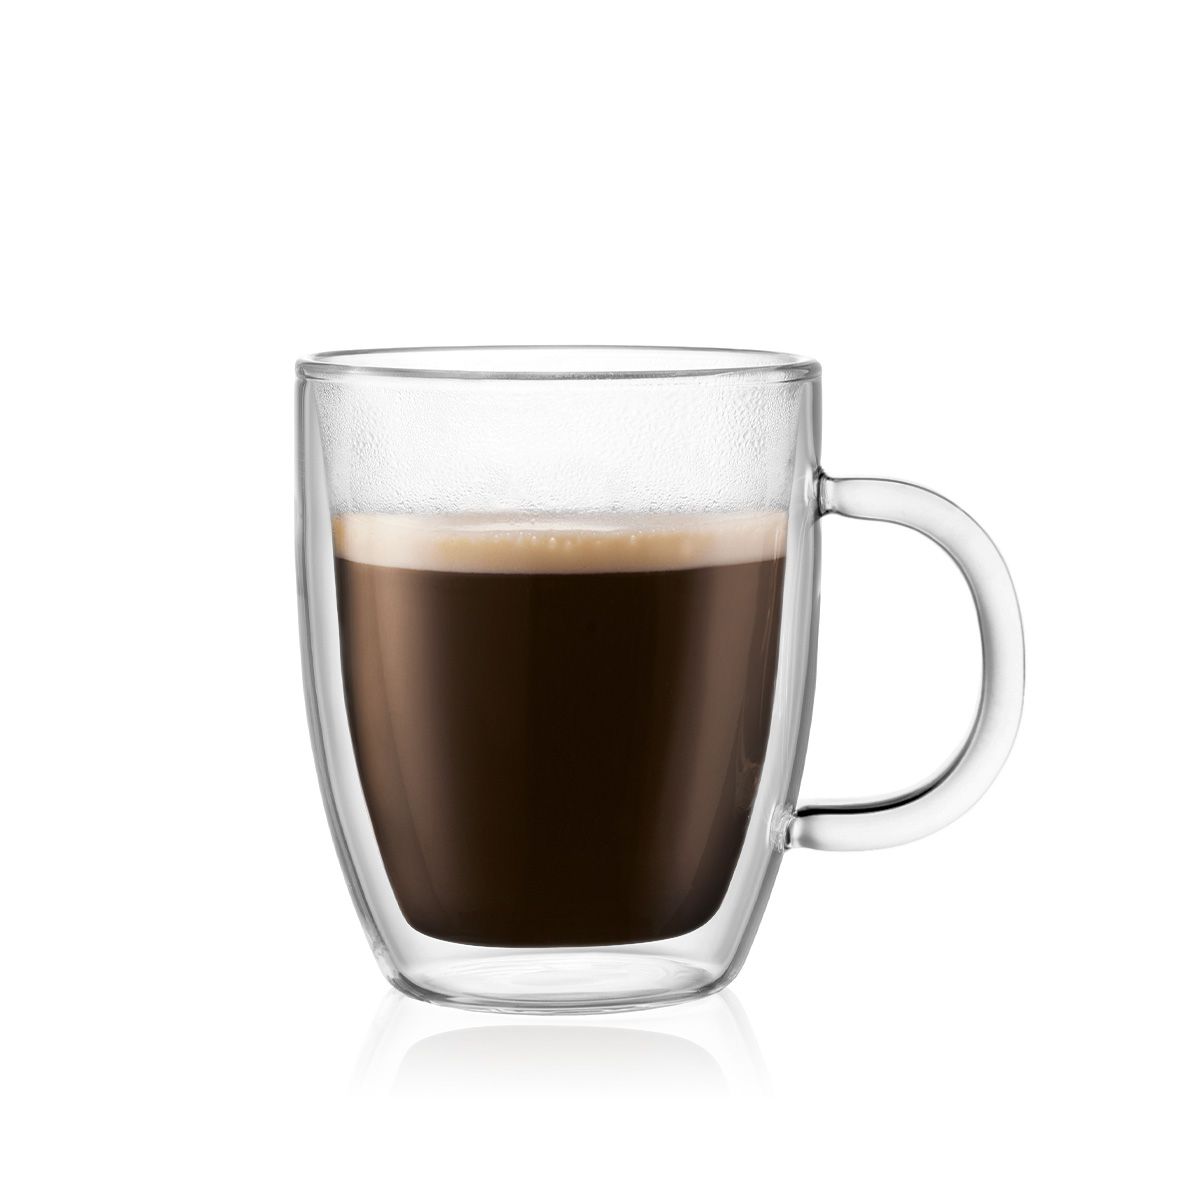 https://makerscoffee.com/wp-content/uploads/2022/05/Bodum-Double-Wall-Bistro-Coffee-Mug.jpg